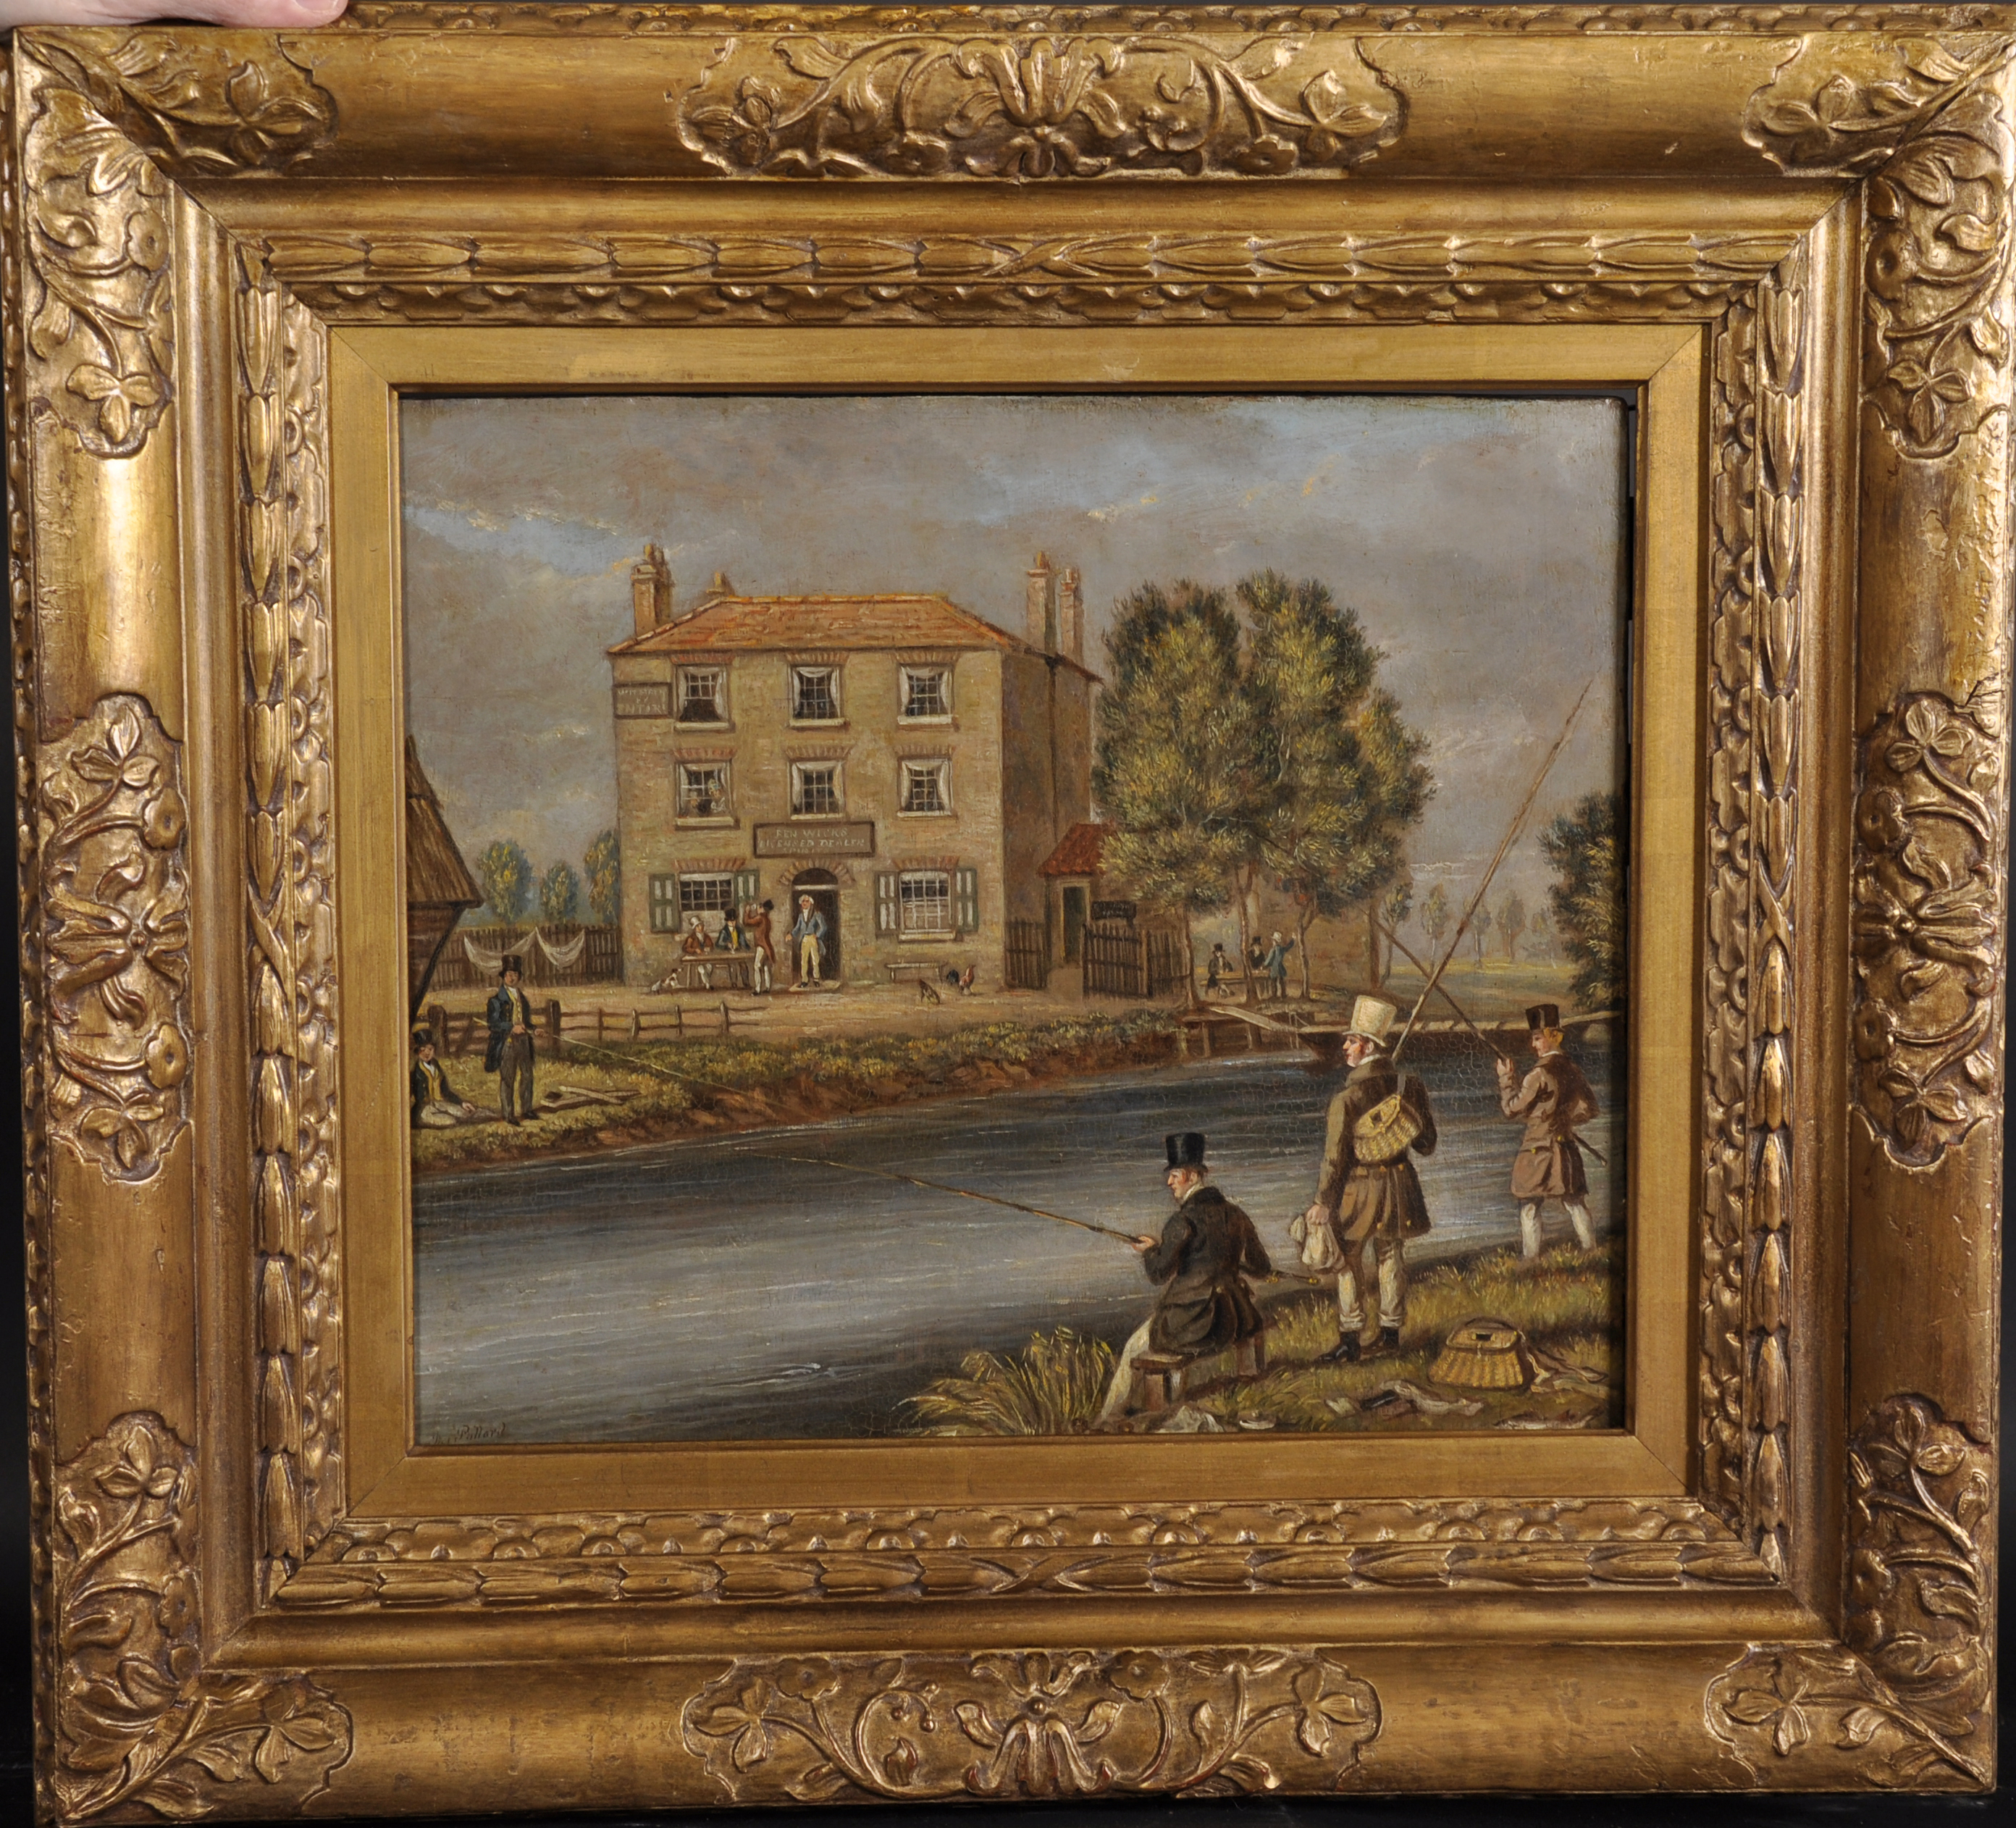 James Pollard (1792-1867) British. "Ben Wicks, Licensed Dealer Spirits", an Inn in a River - Image 2 of 7